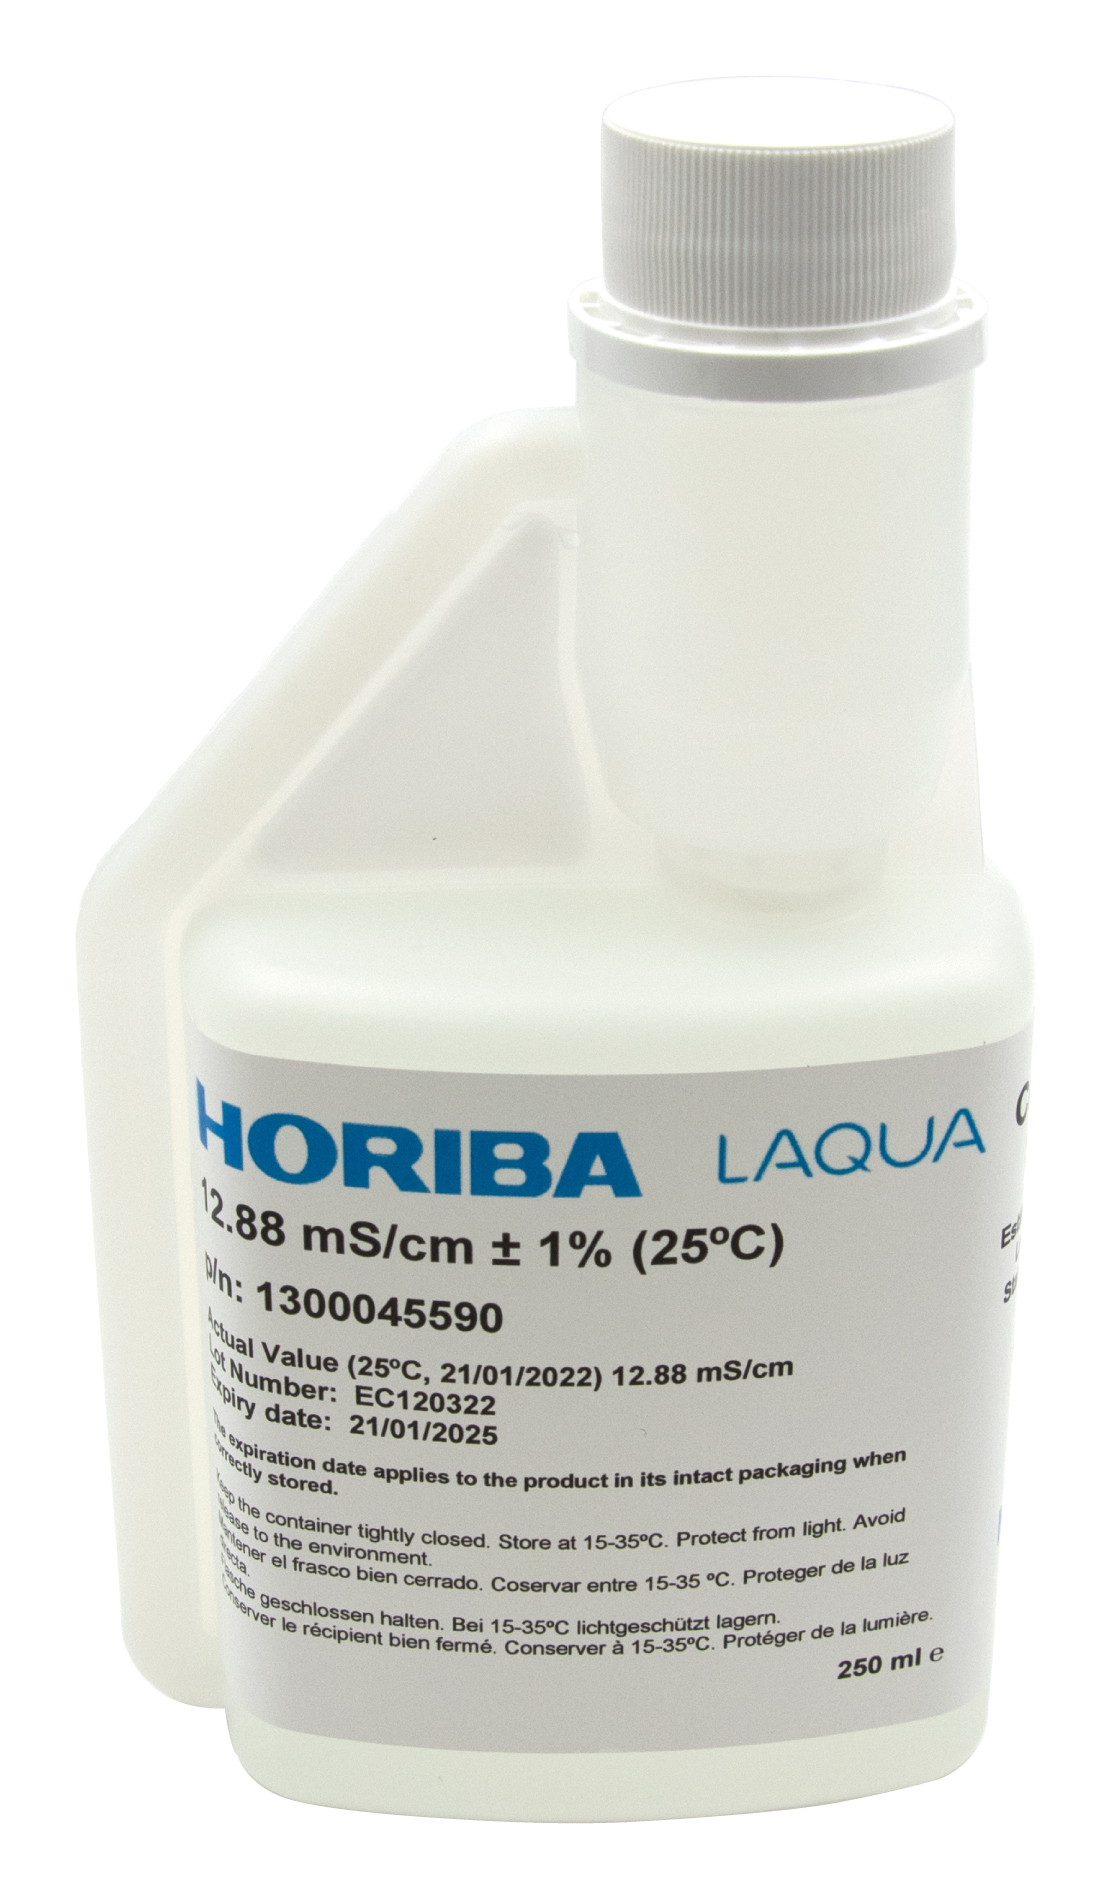 HORIBA 12.88 mS/cm conductivity calibration solution 250ml (250-EC-1288)